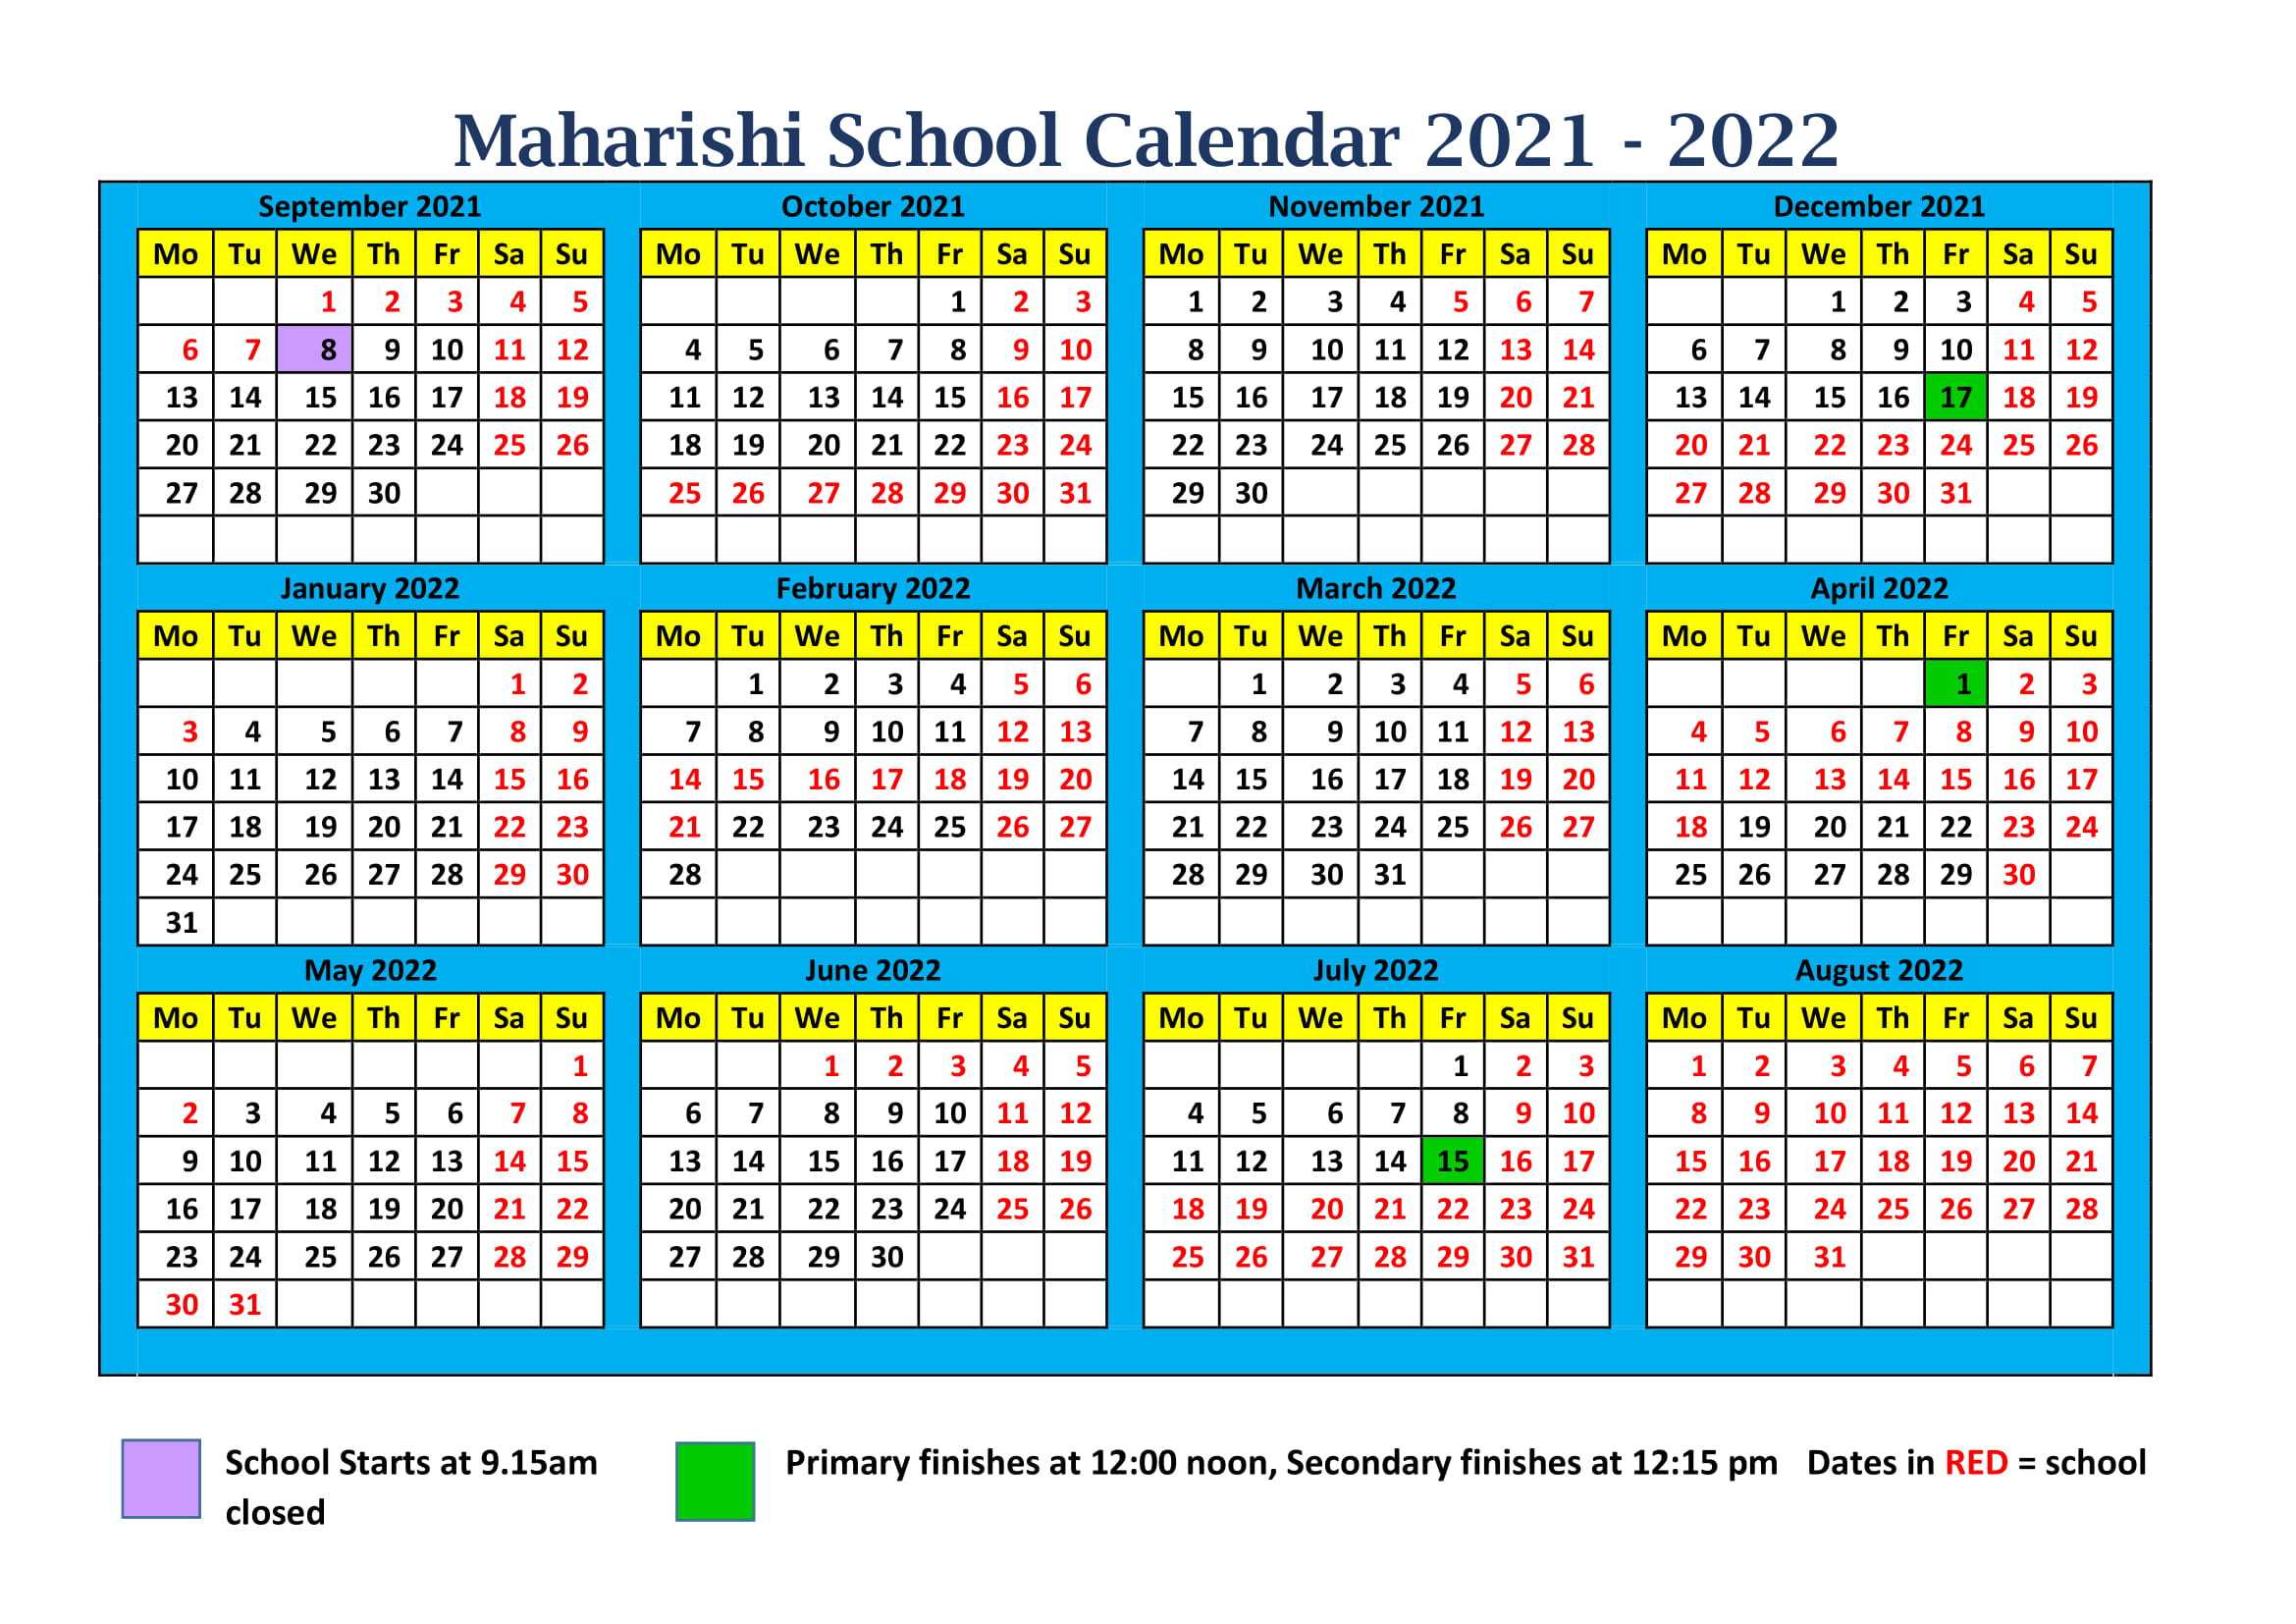 Calendar 2021-2022-1 - Maharishi School